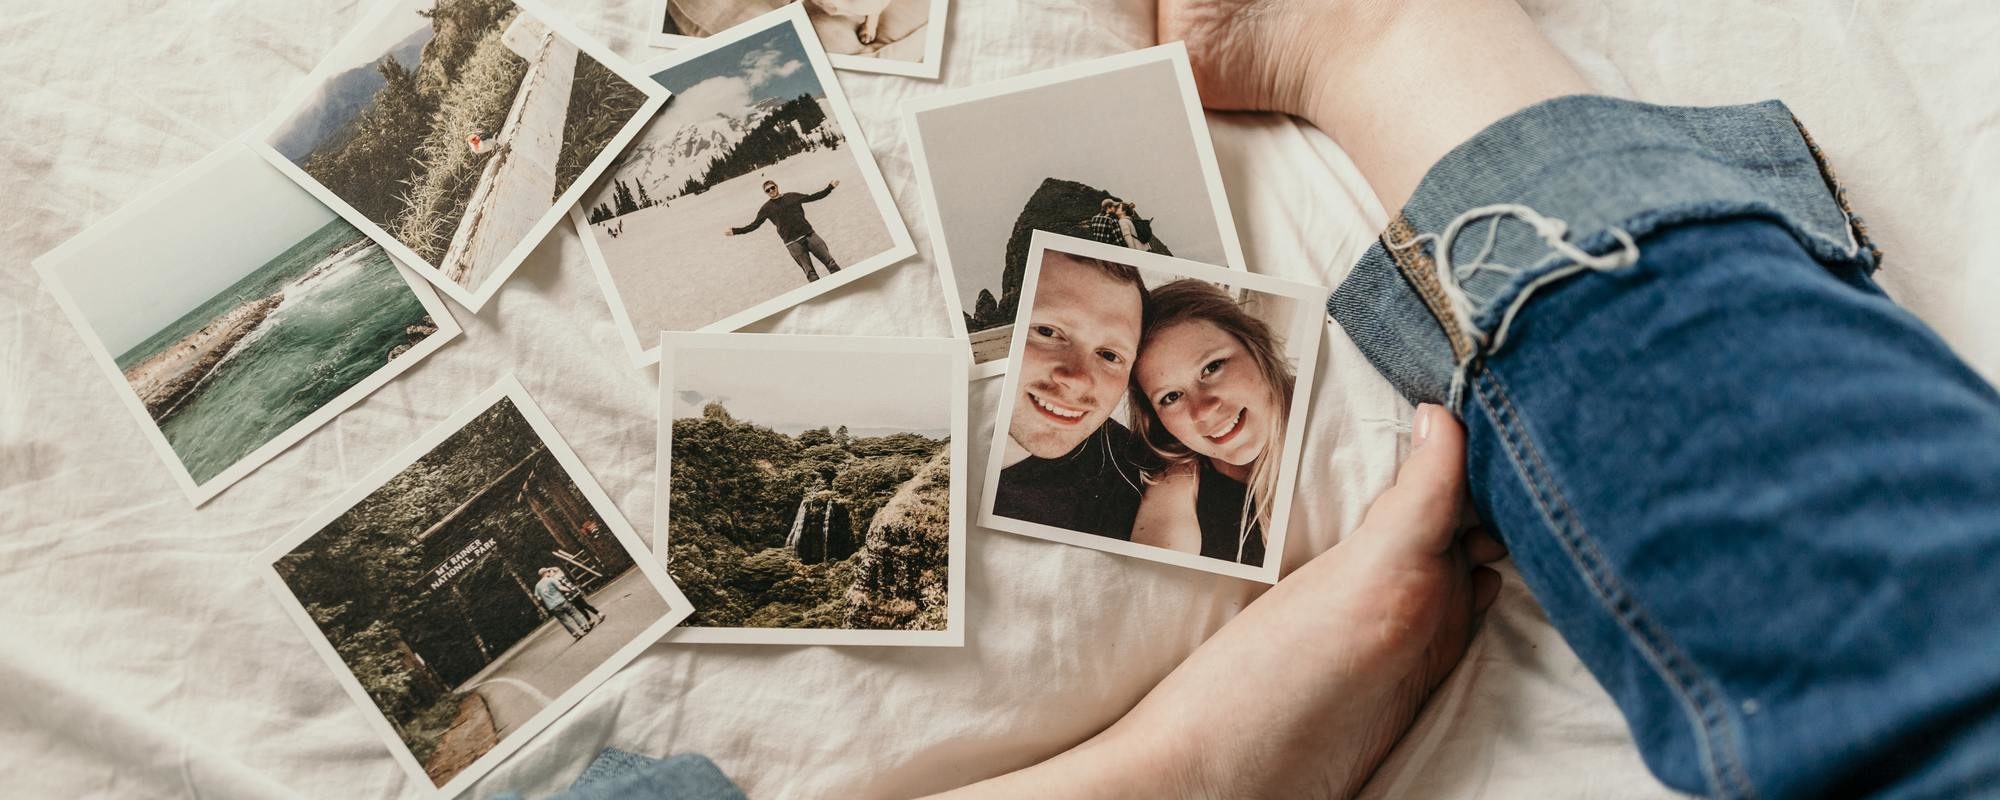 brigid condon recommends Cute Polaroid Pictures Ideas